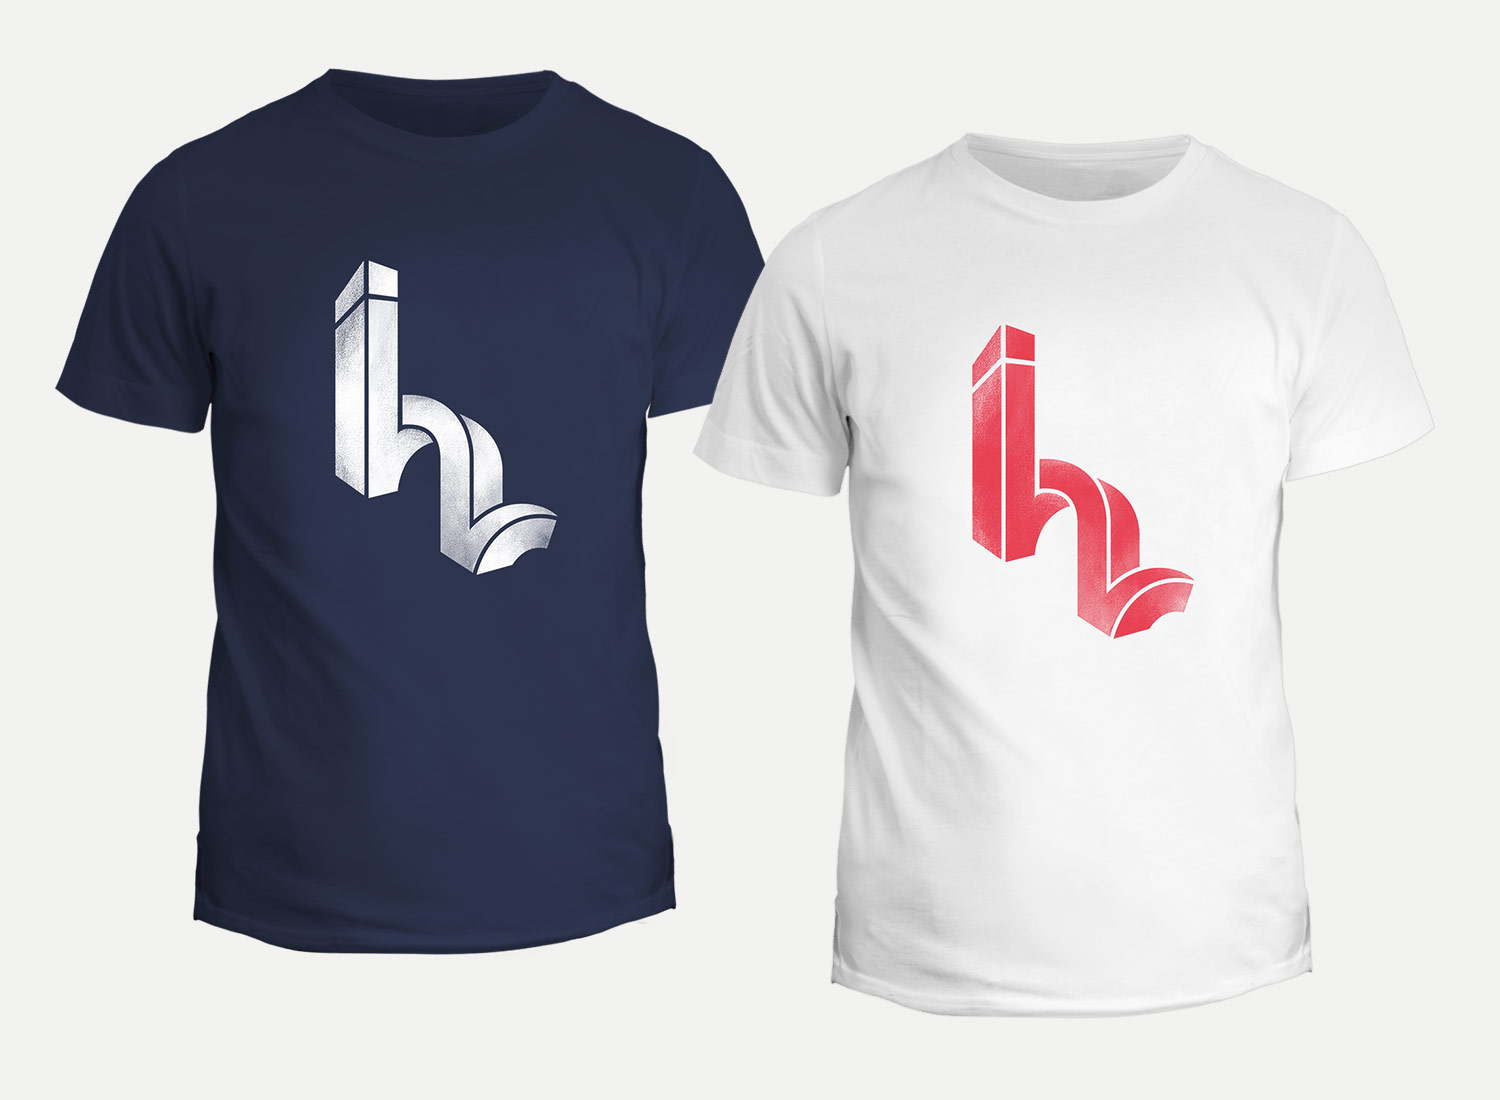 H2 Startup T Shirt Design - by Theysaurus